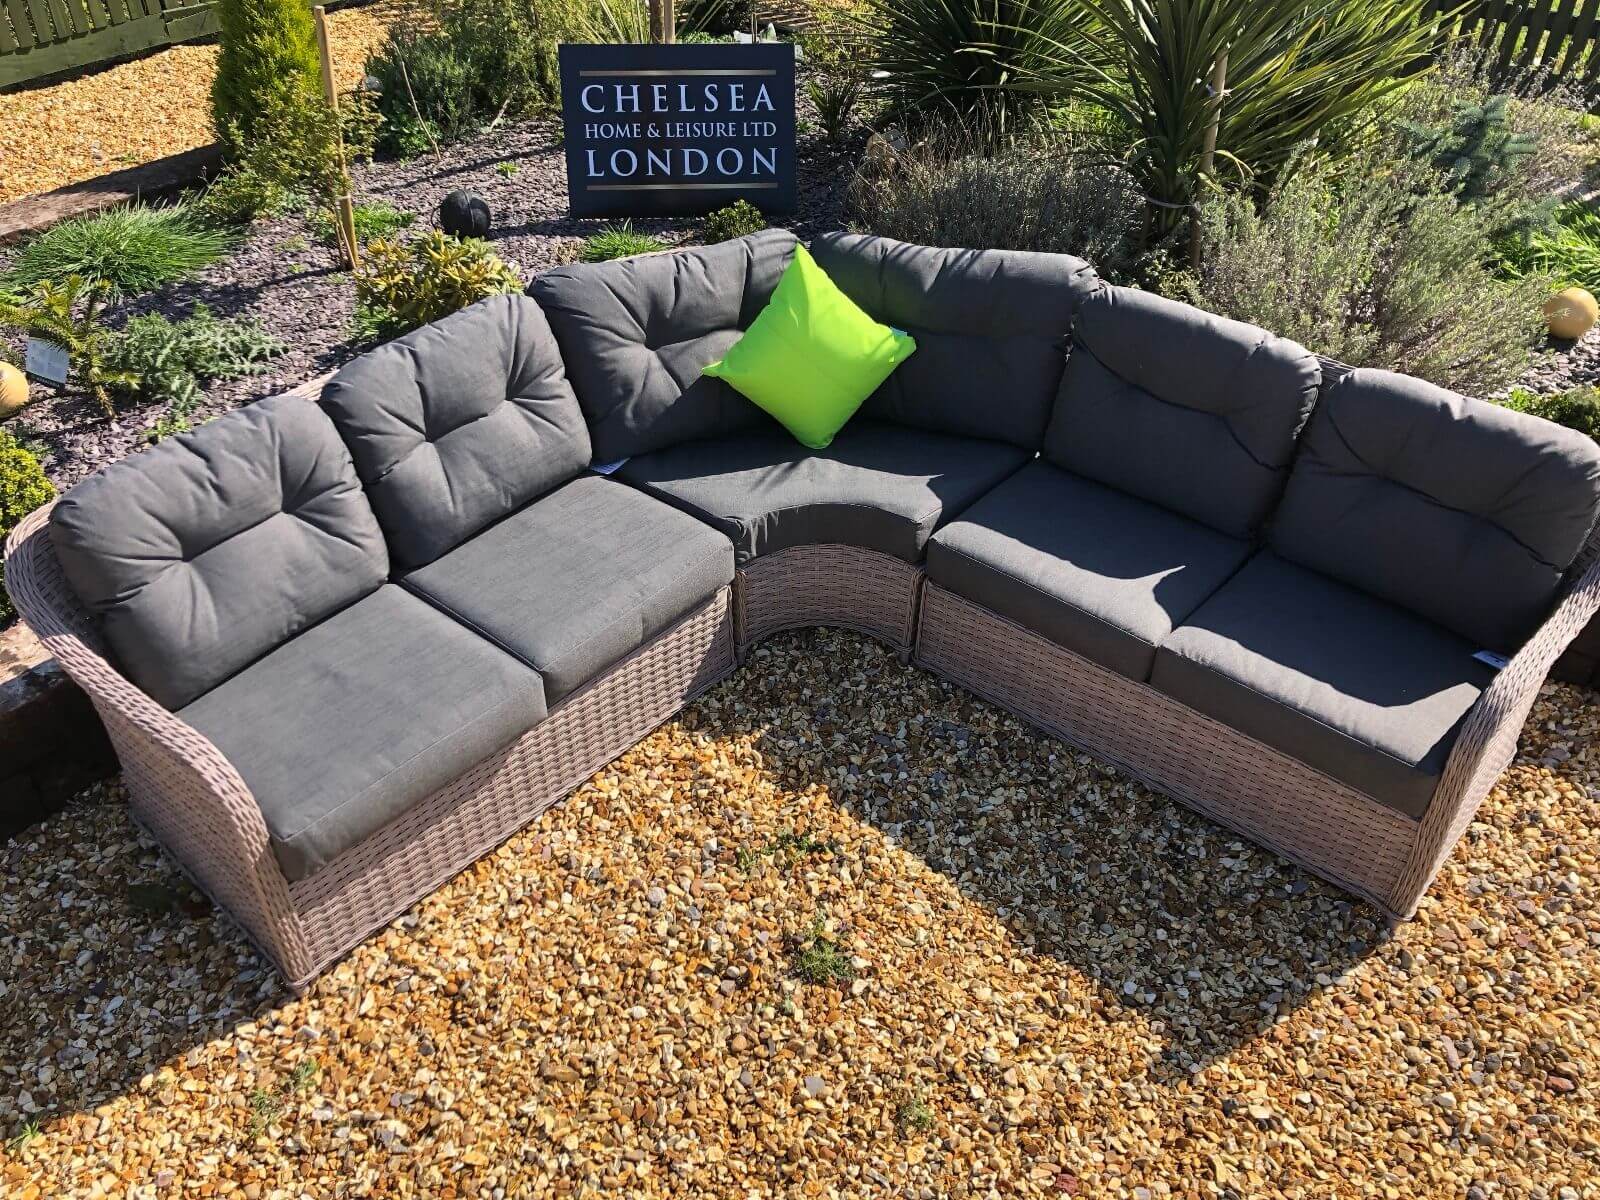 premium Large Rattan corner sofa set – Chelsea Home and Leisure Ltd